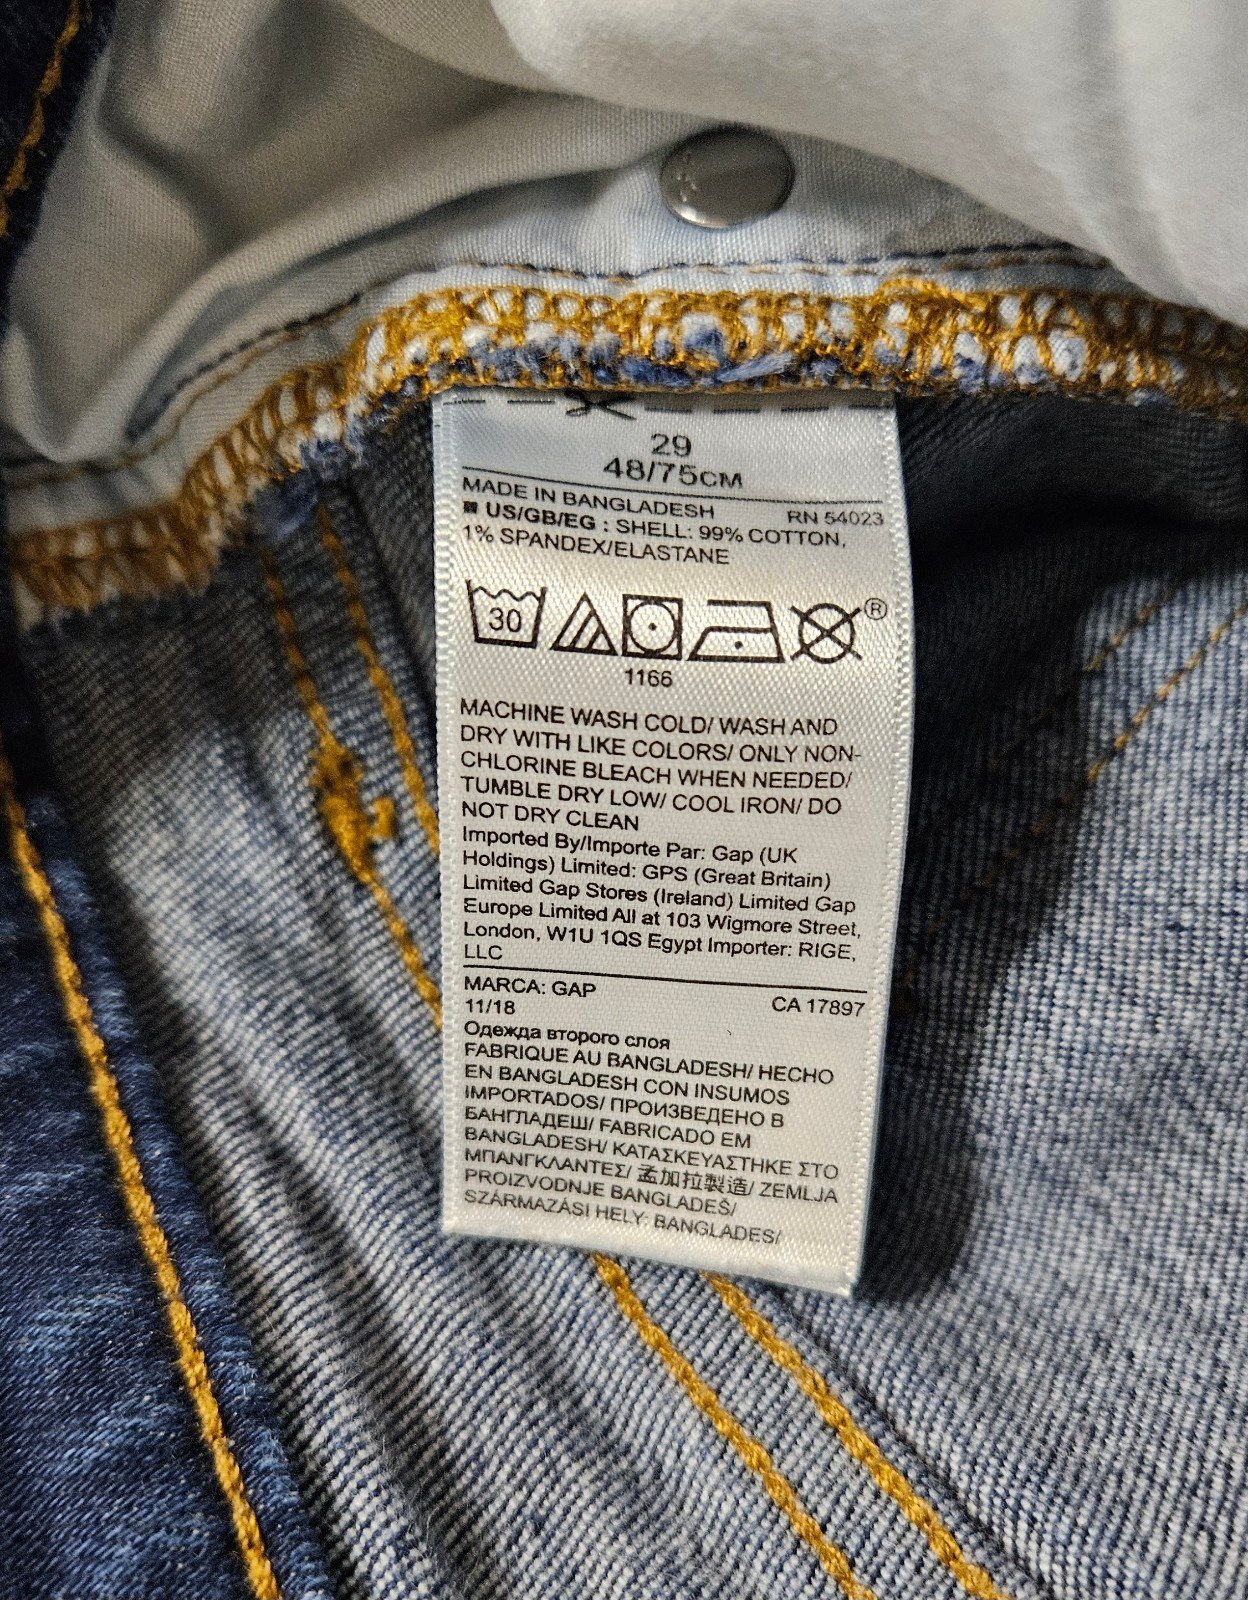 good price Women´s Gap jean shorts I0NXwPqns Wholesale